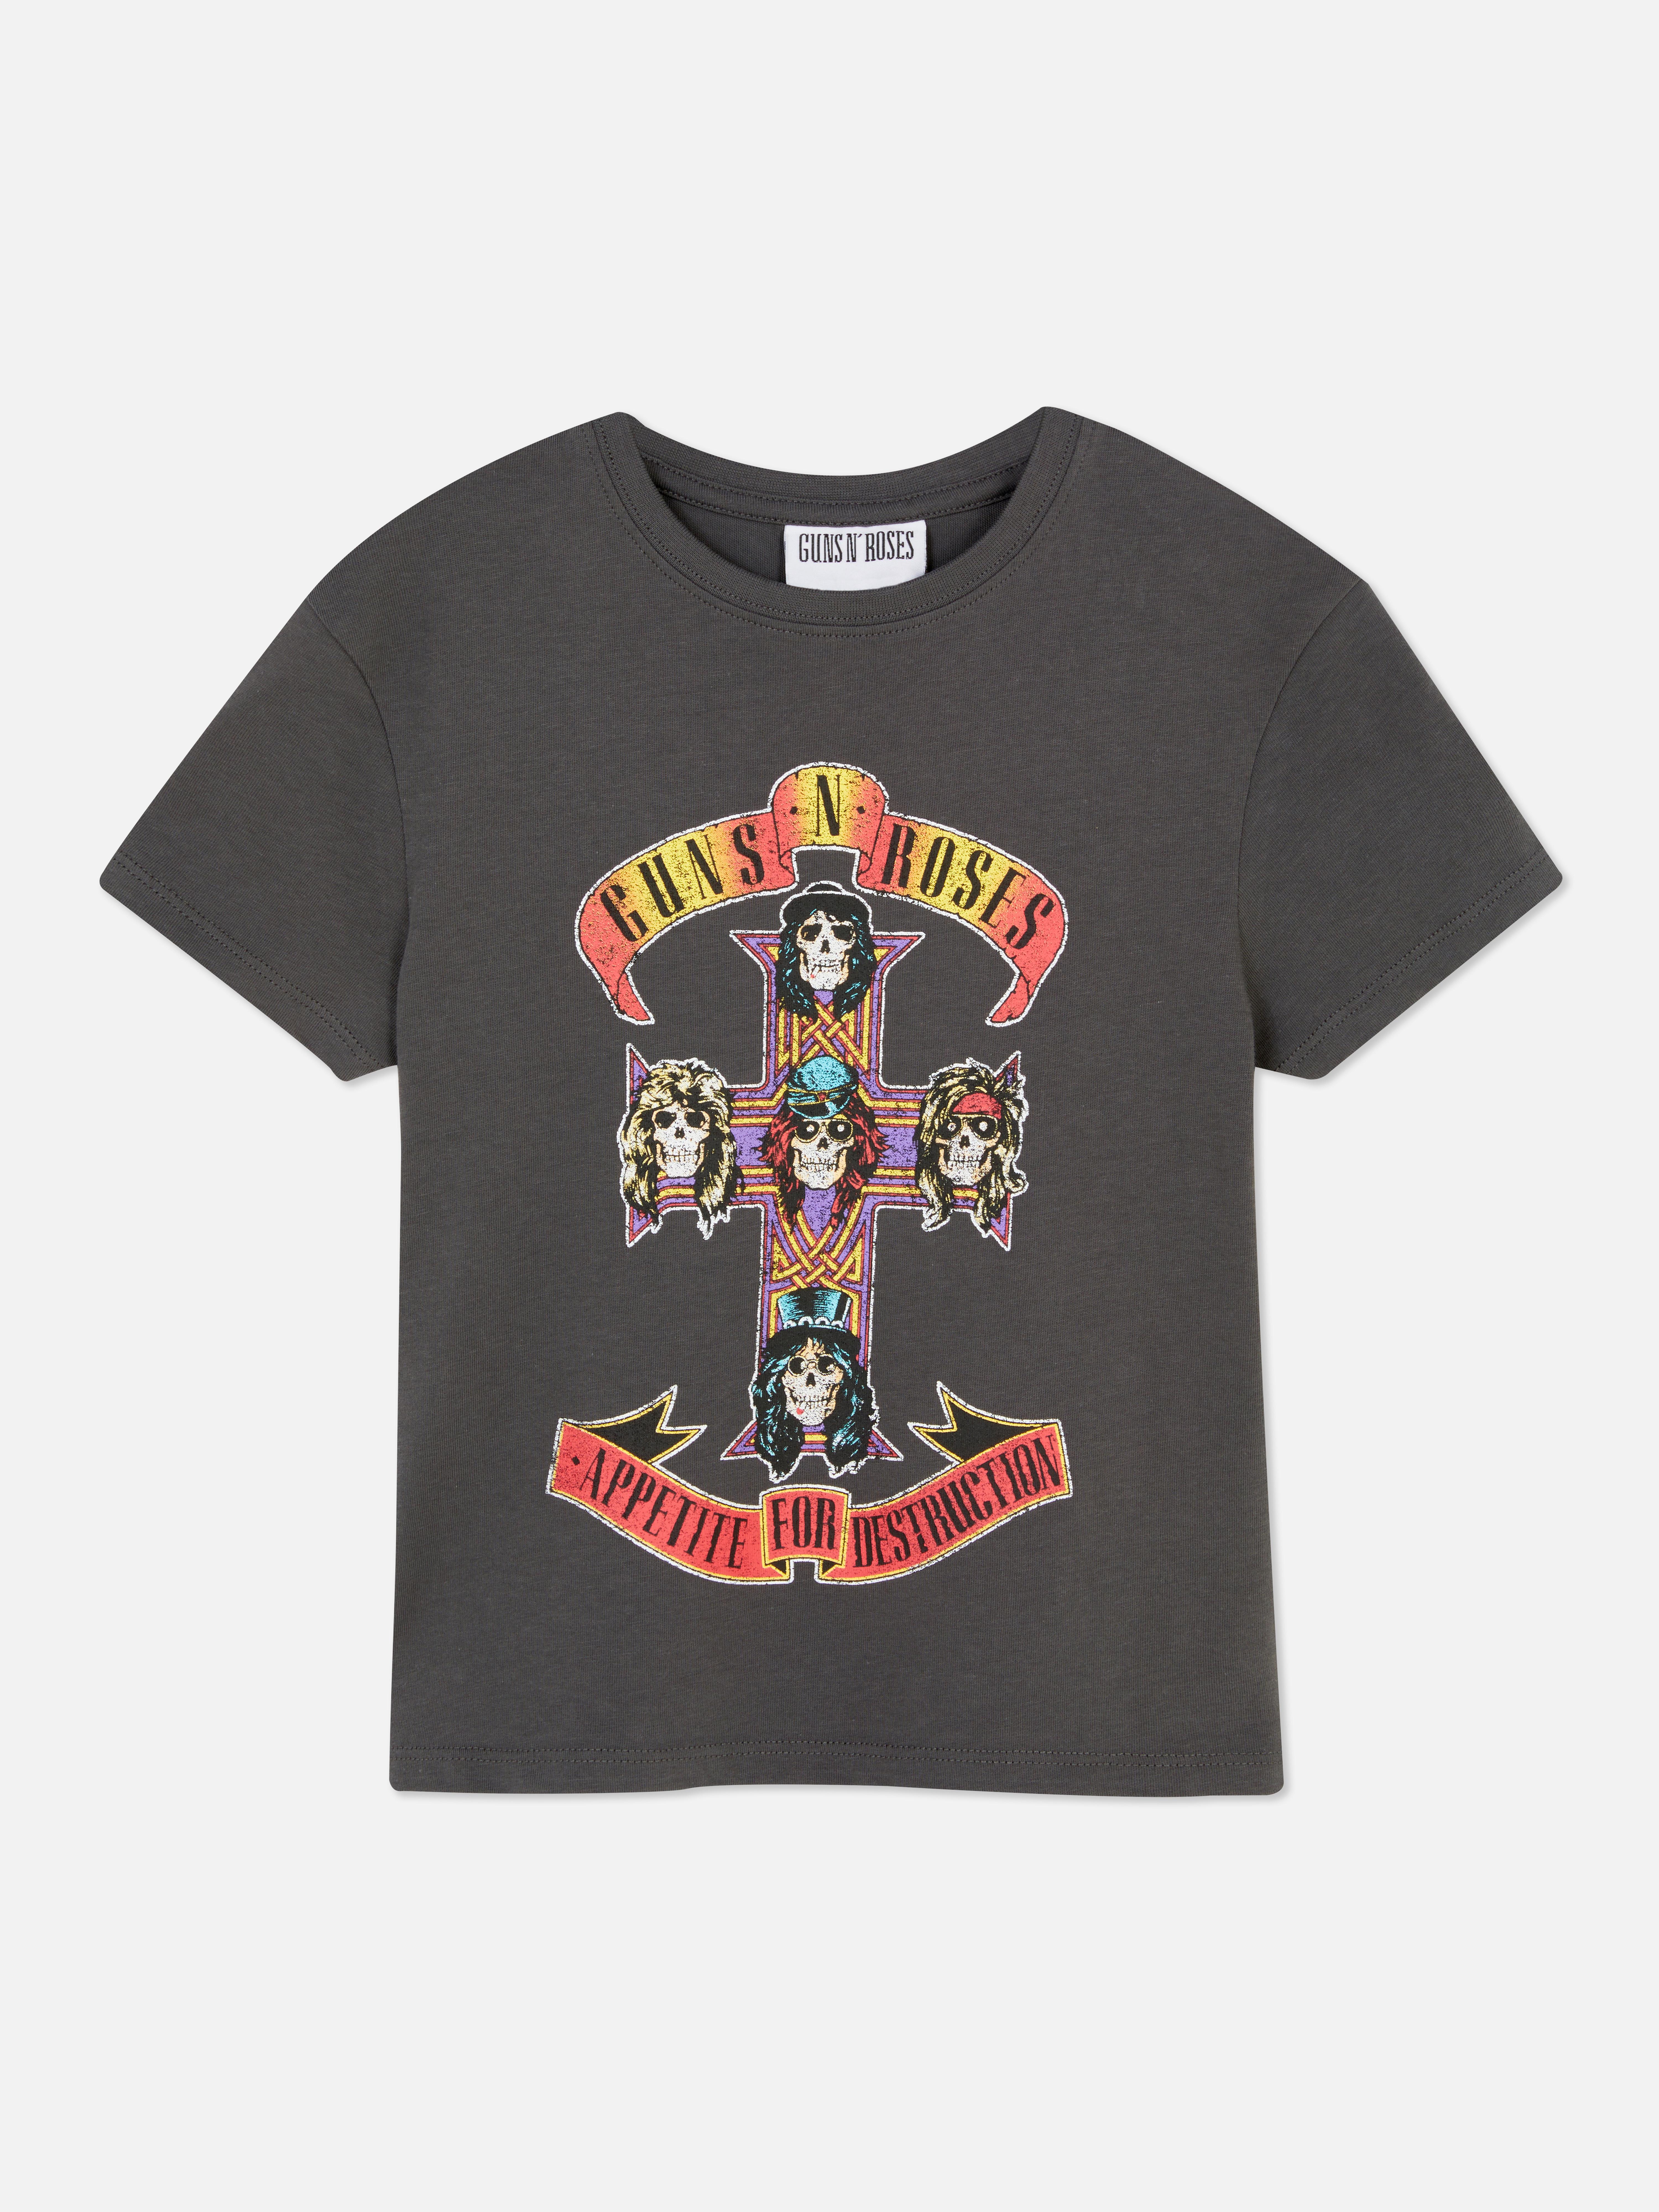 Guns N' Roses Graphic T-shirt